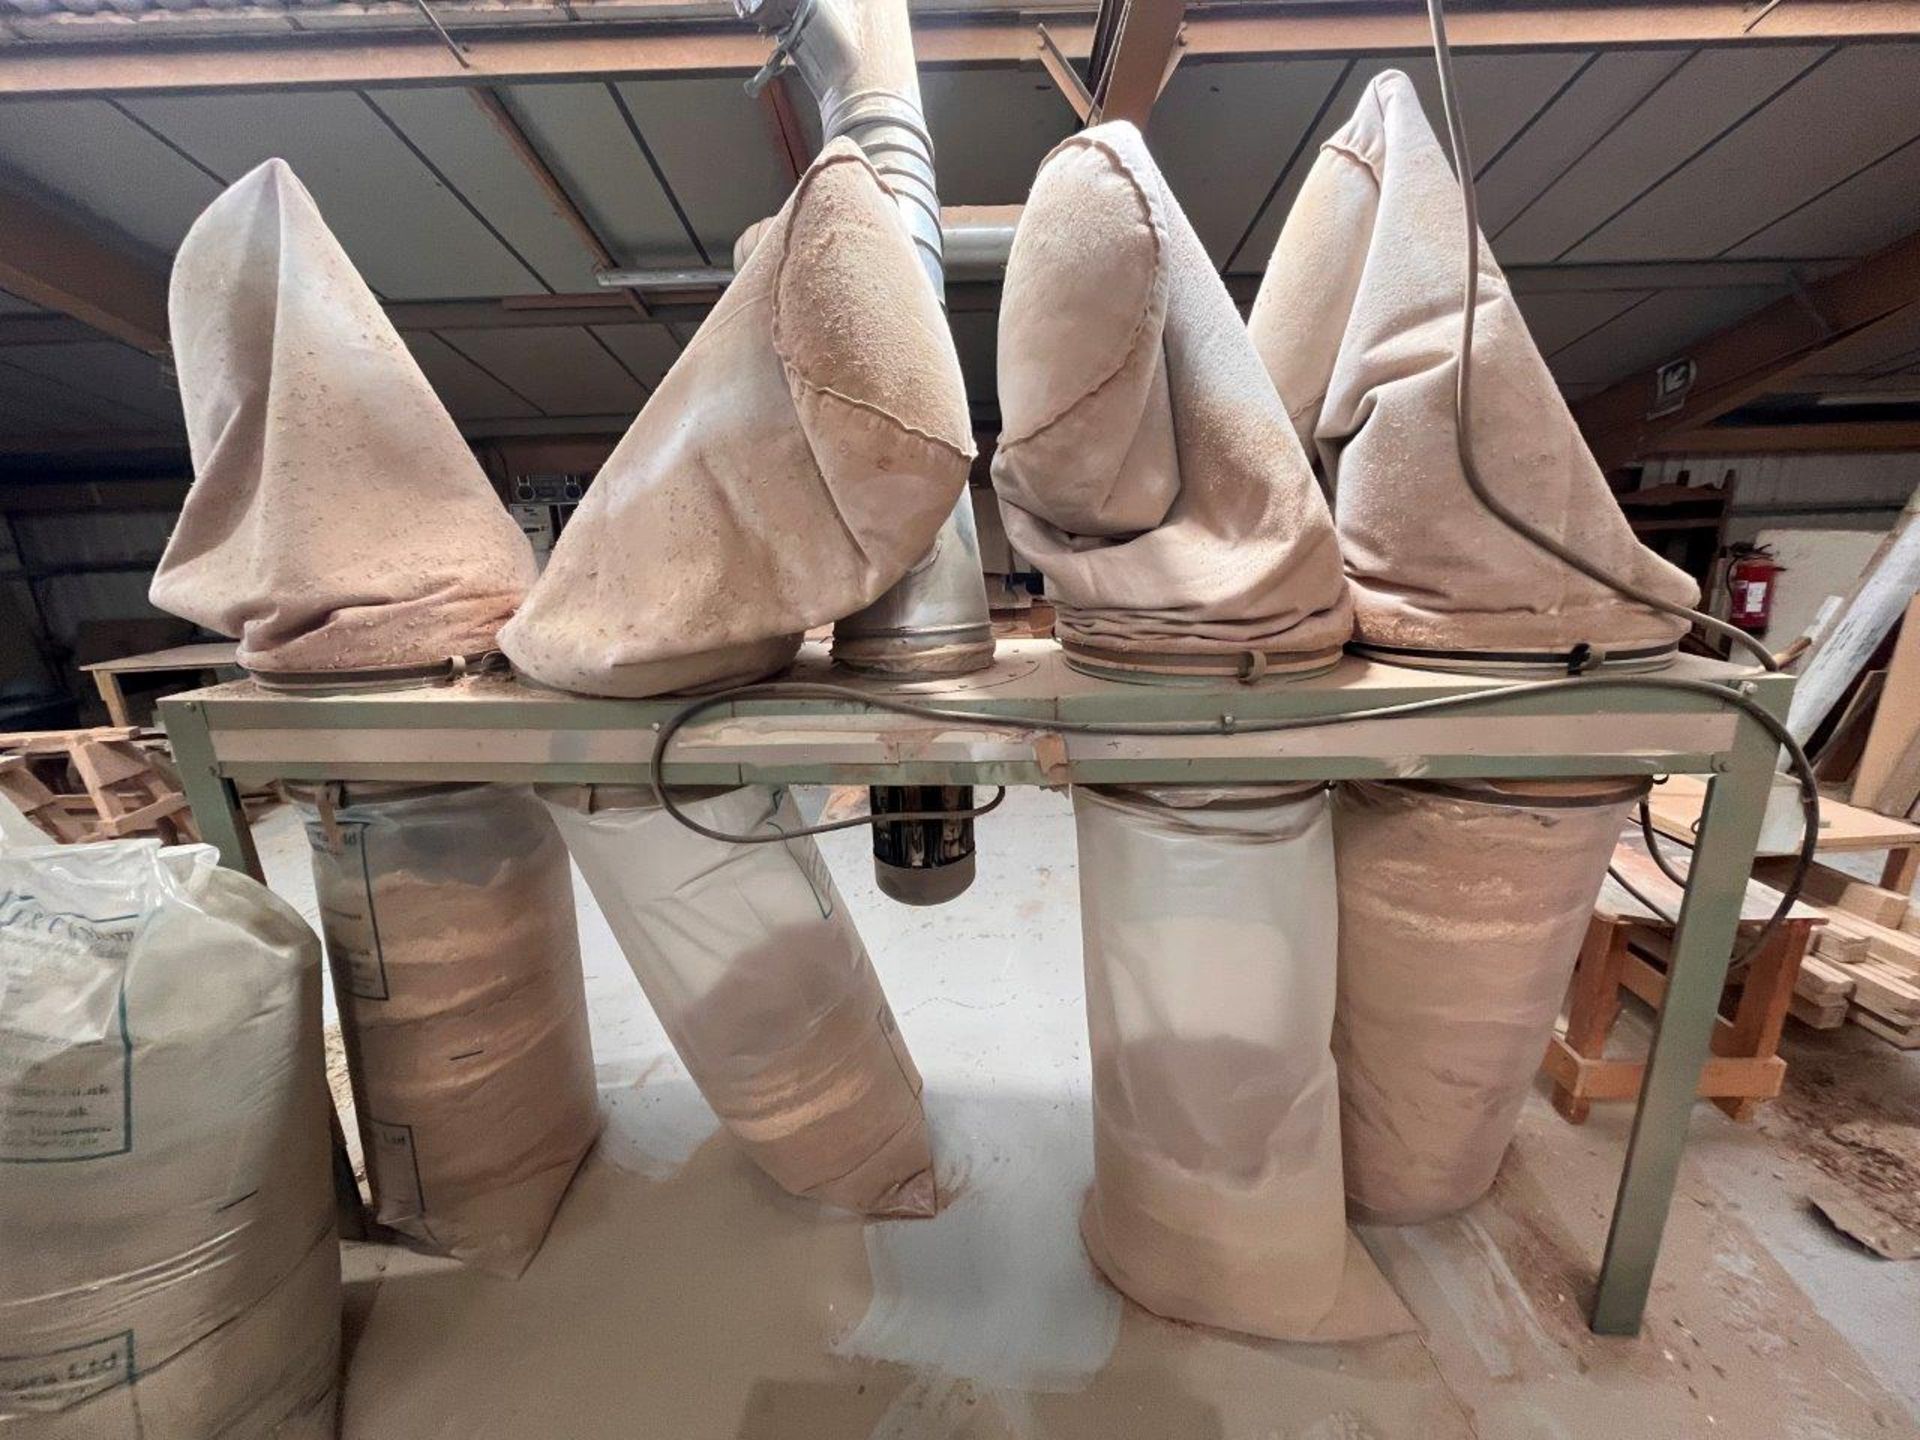 Four bag dust collection unit (Located on mezzanine floor)